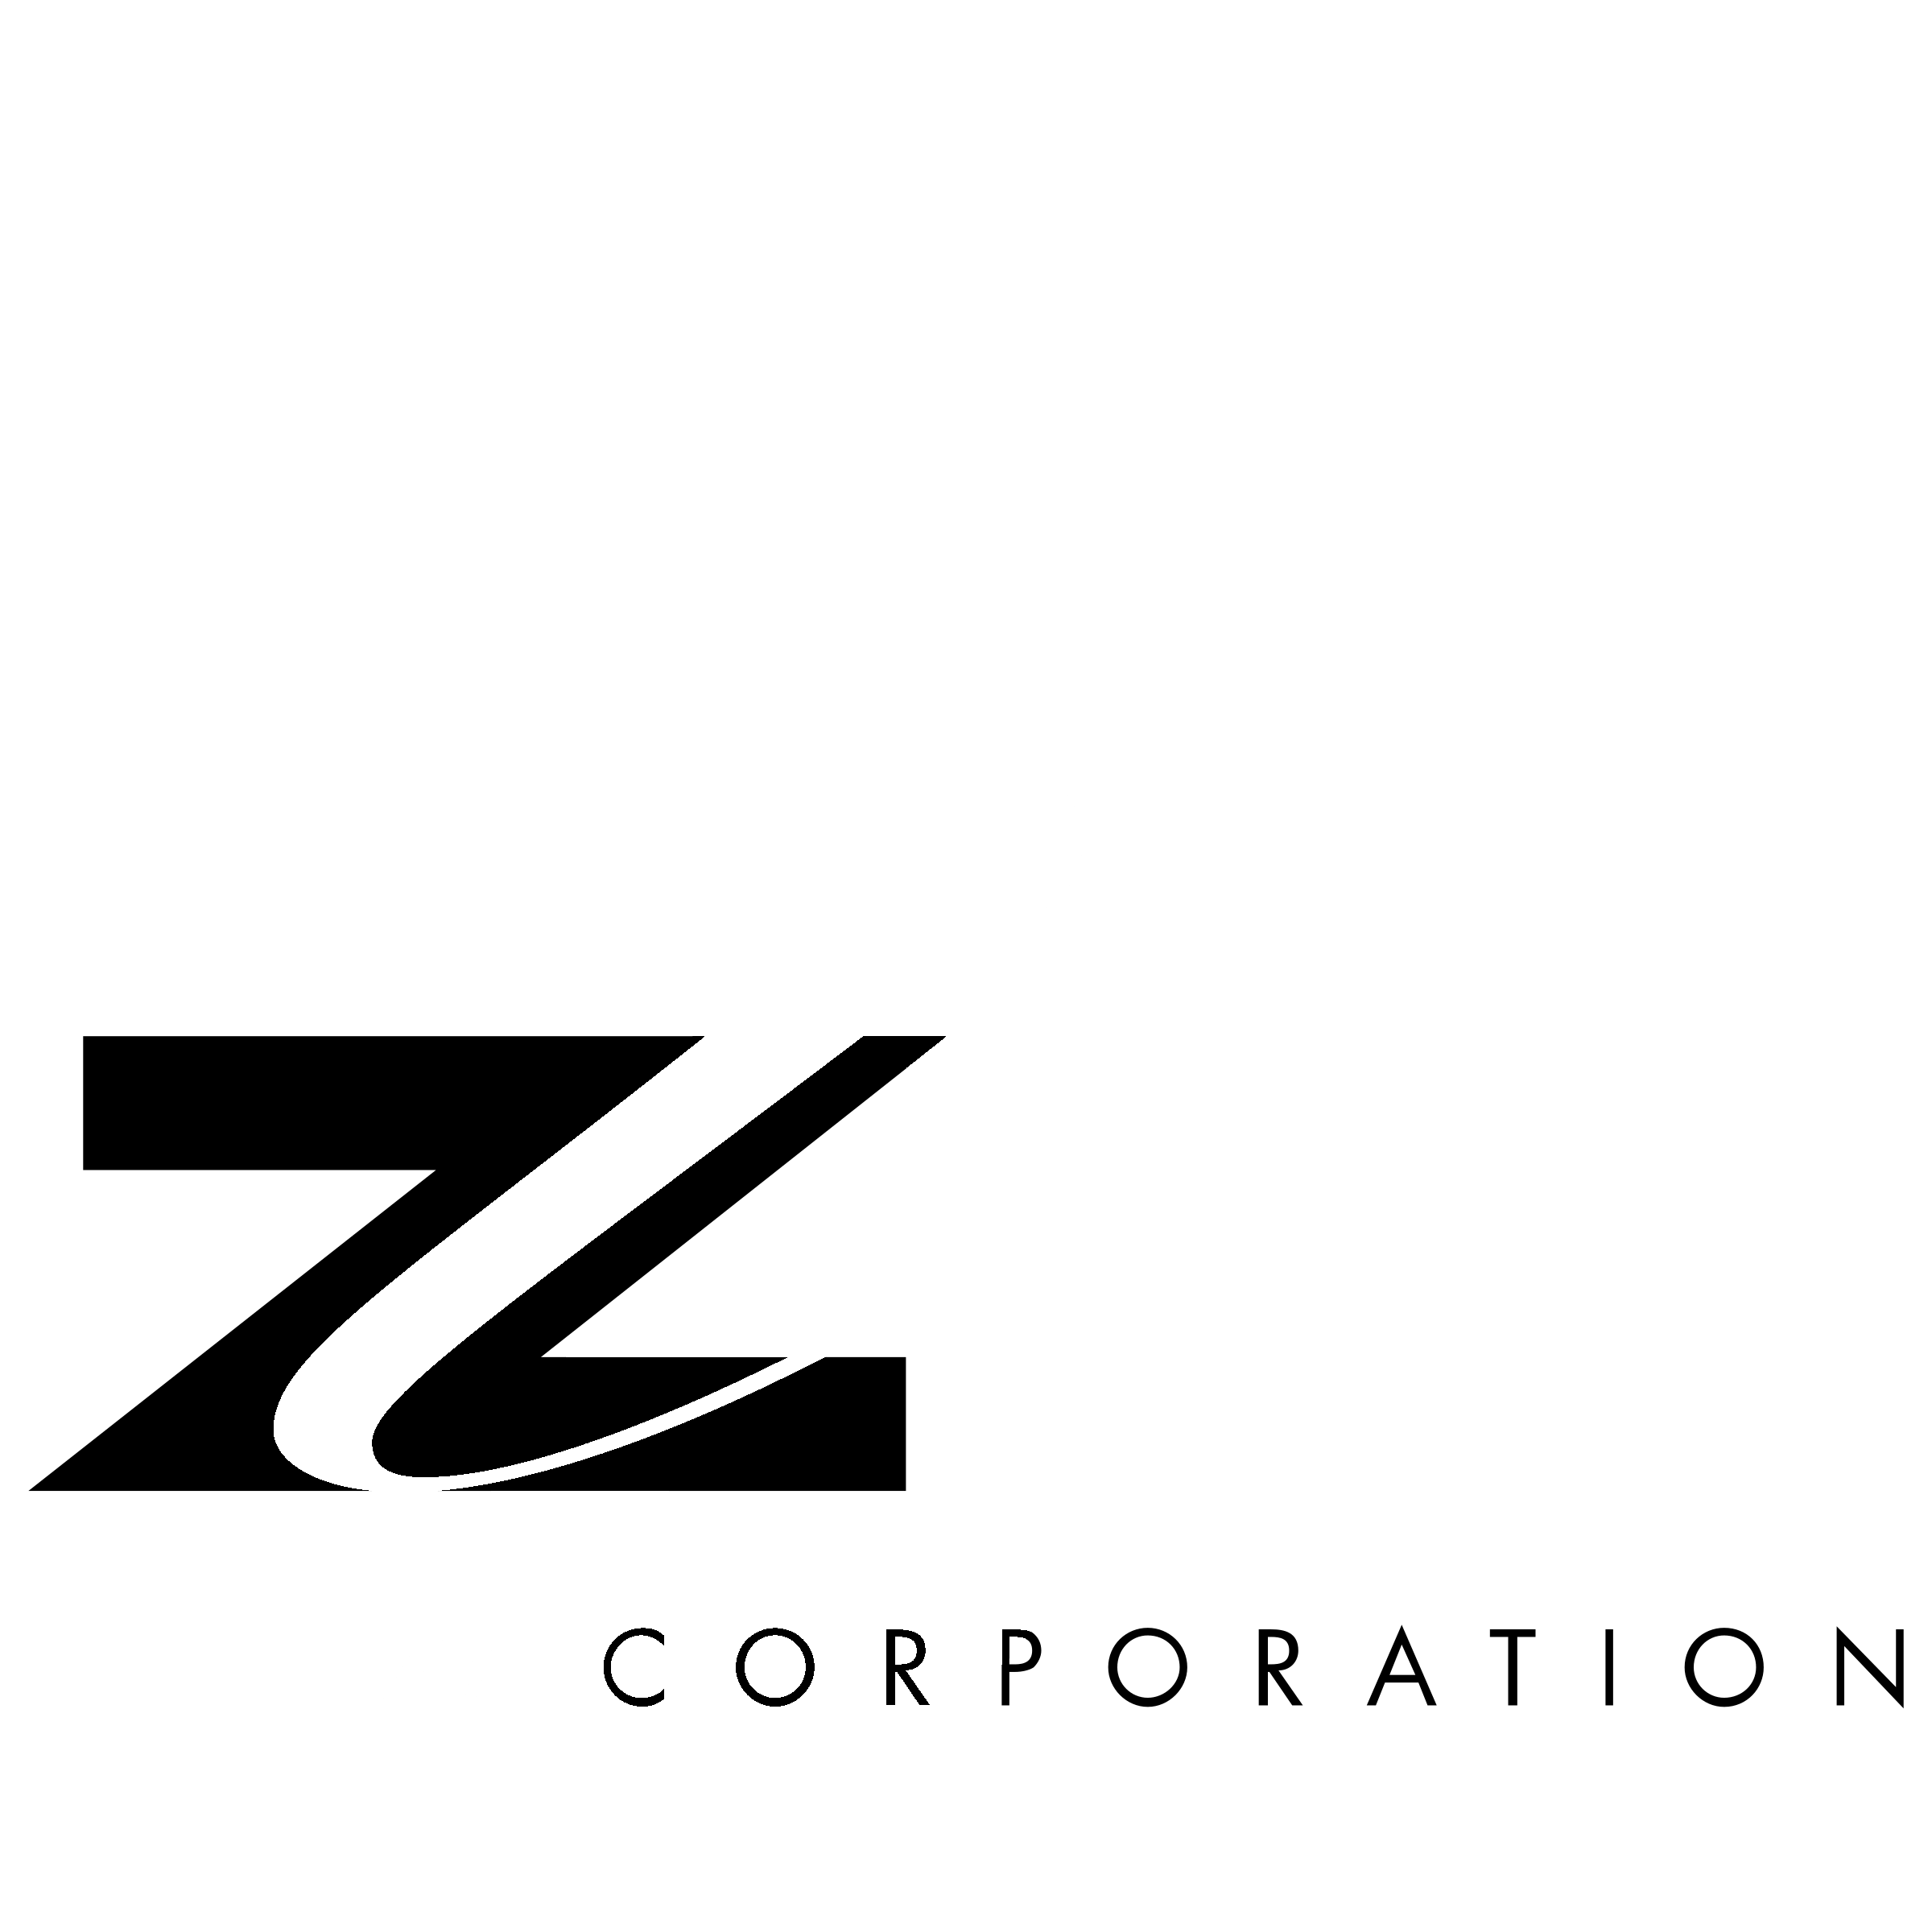 Zi Logo - Zi Corporation Logo PNG Transparent & SVG Vector - Freebie Supply